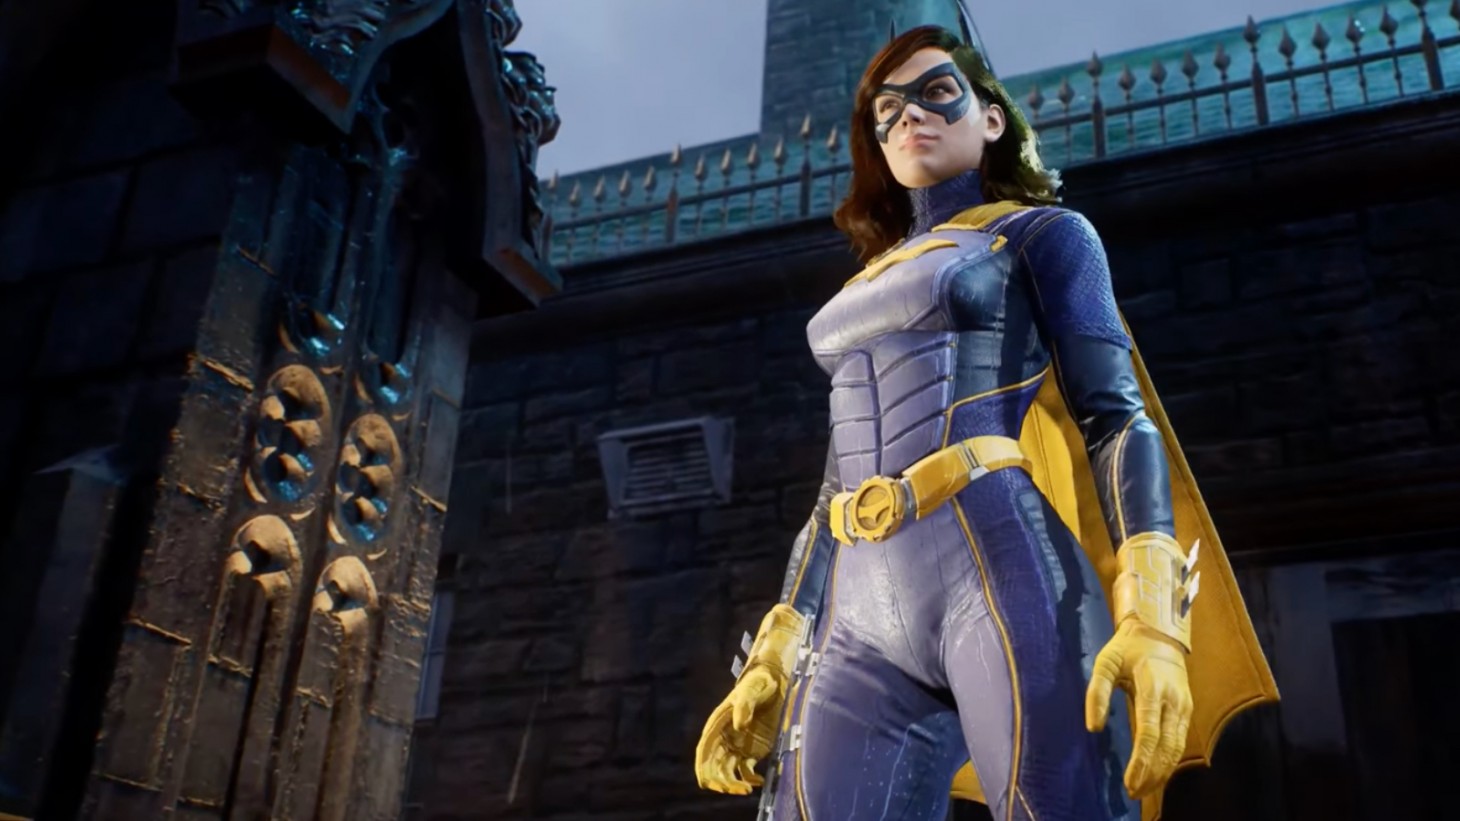 Gotham Knights' Revealed: A Next-Gen Batman Game Without The Batman